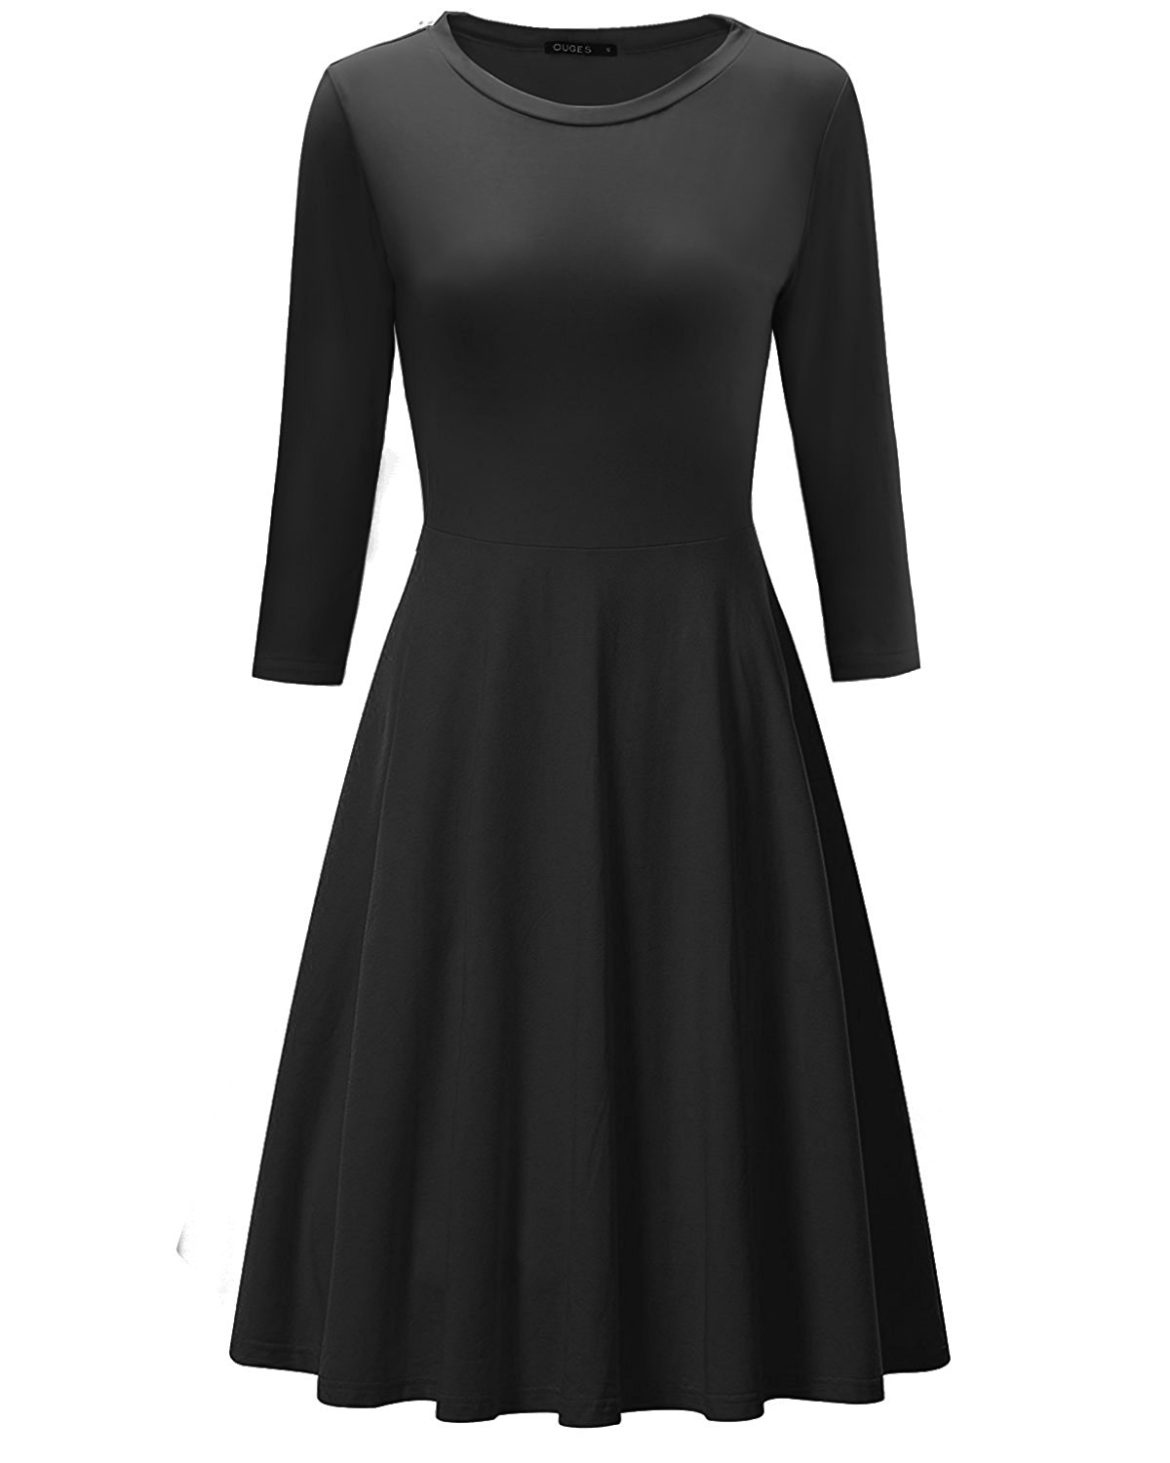 OUGES Women’s 3/4 Sleeve Casual Cotton Flare Dress – Shop2online best ...